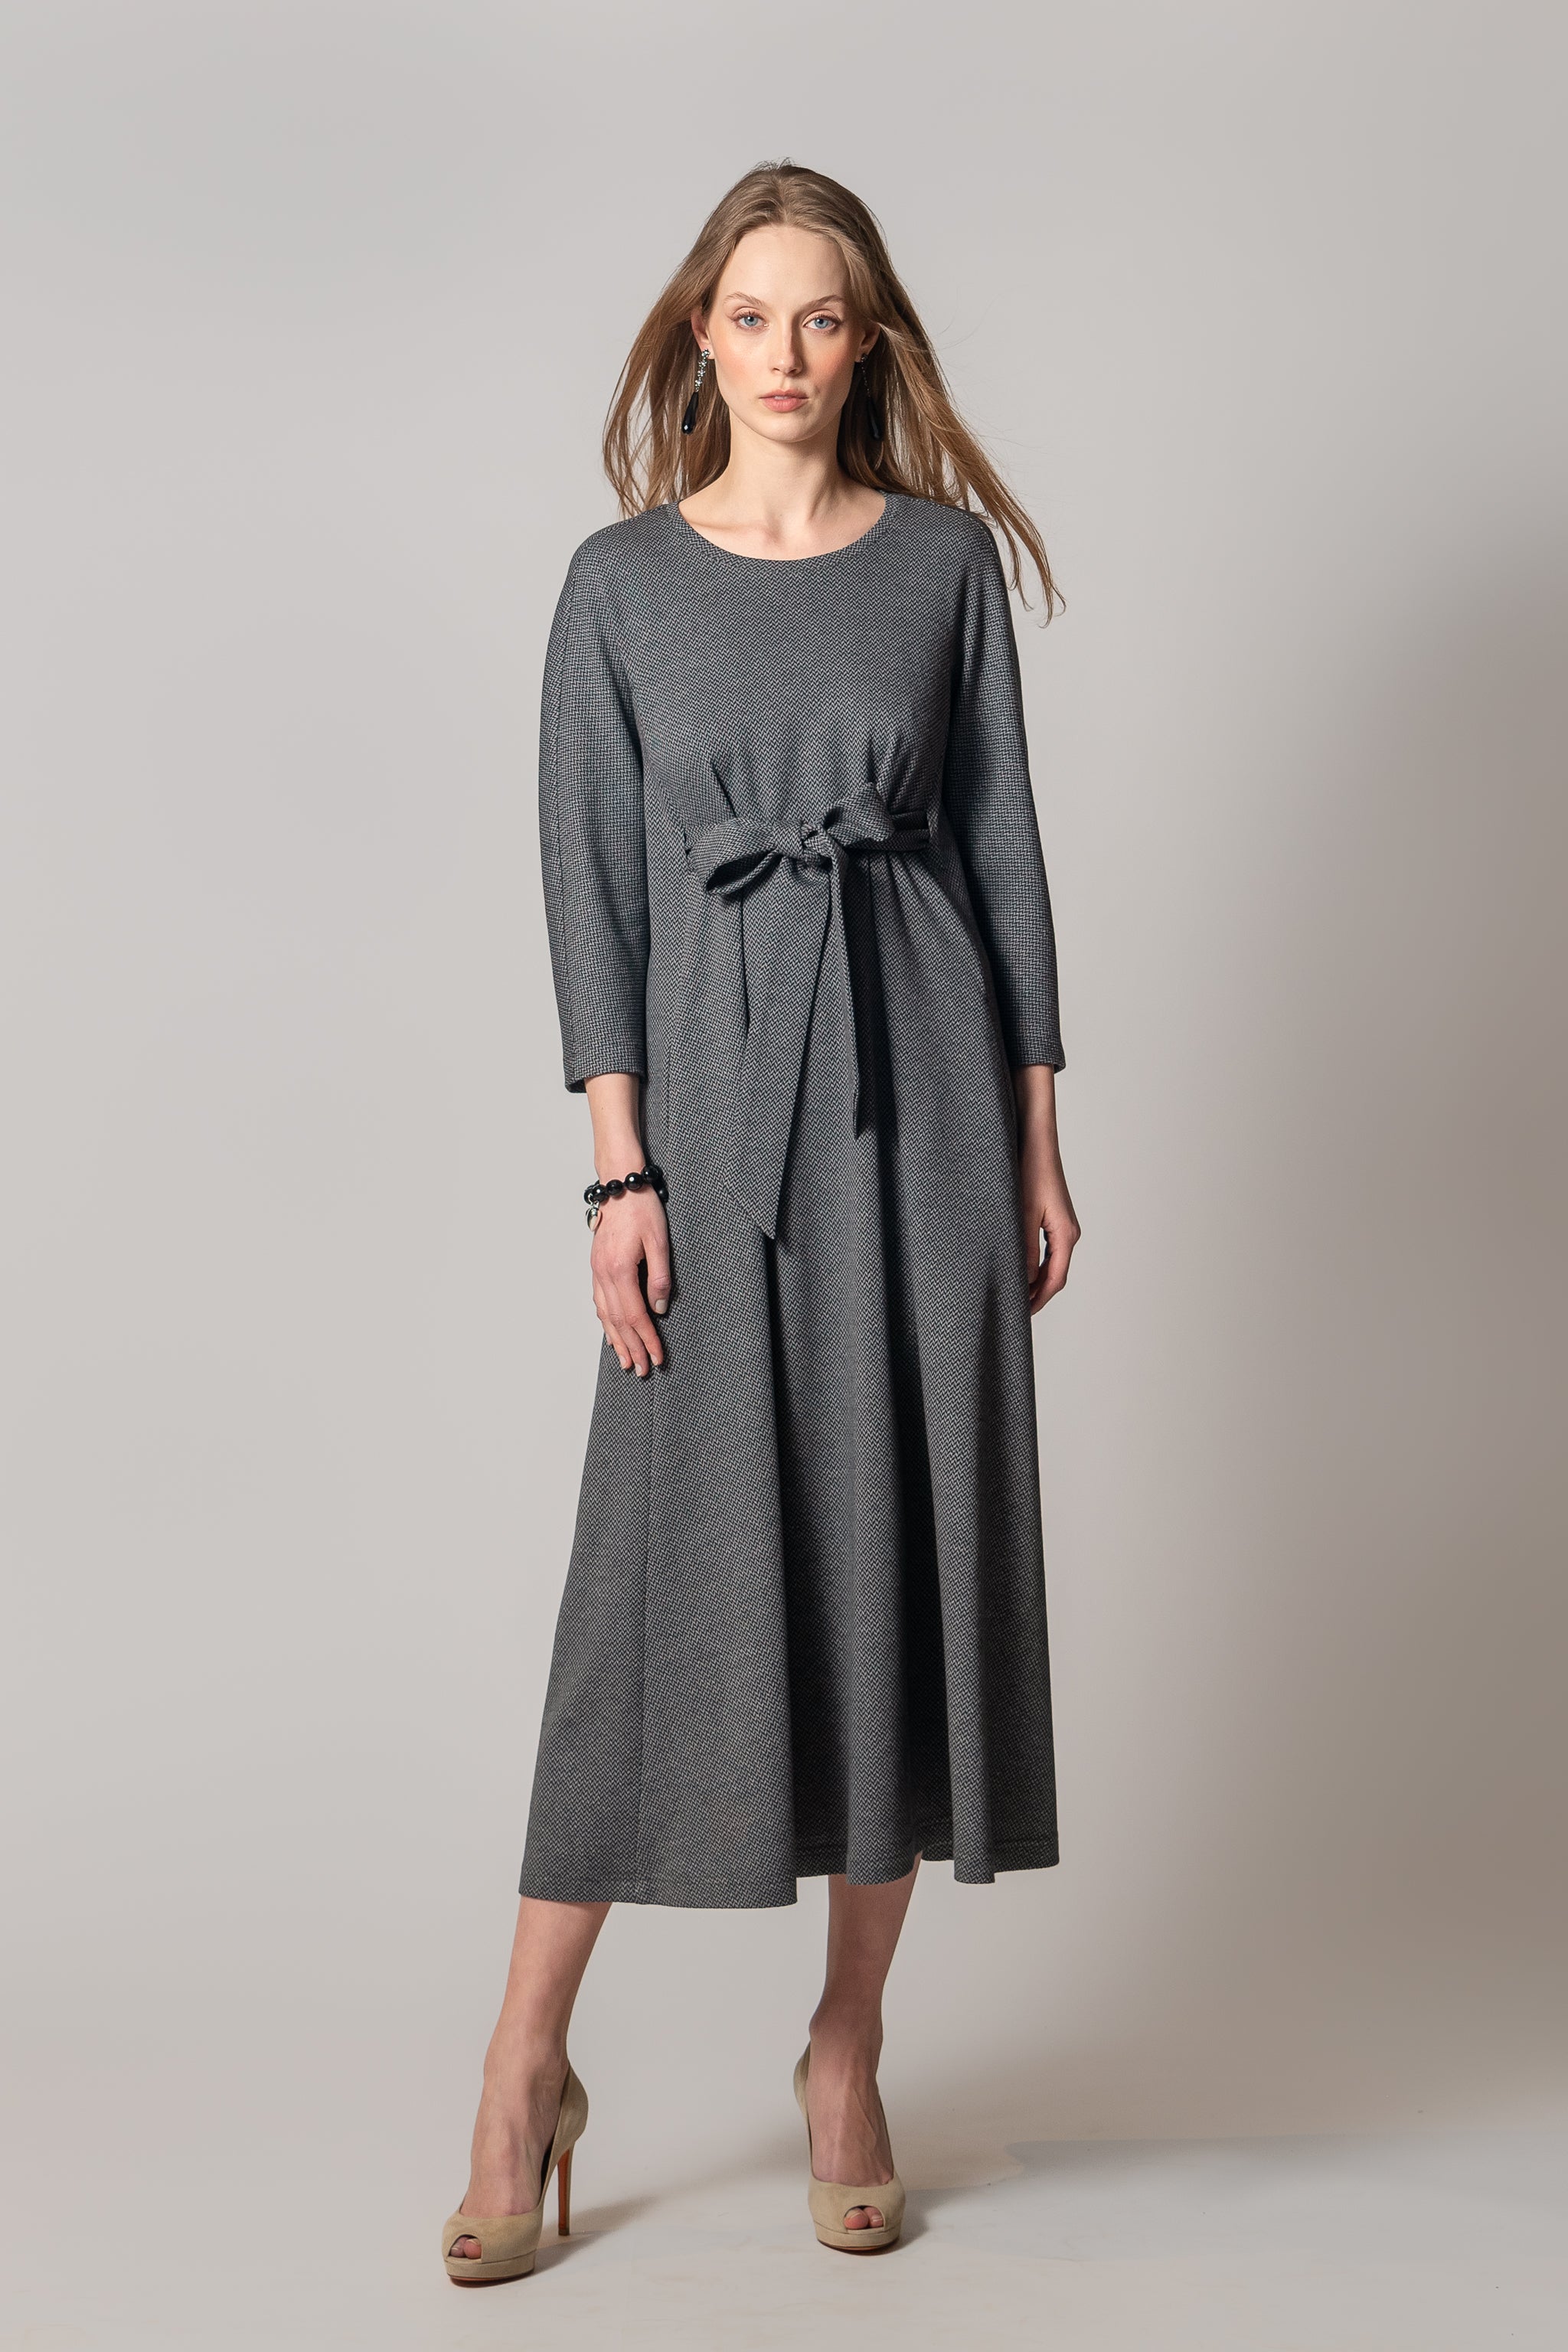 Dress "ALLEGRO MIDI SP" / Extrafine Merino Wool & Cotton Blend Jersey by Loro Piana